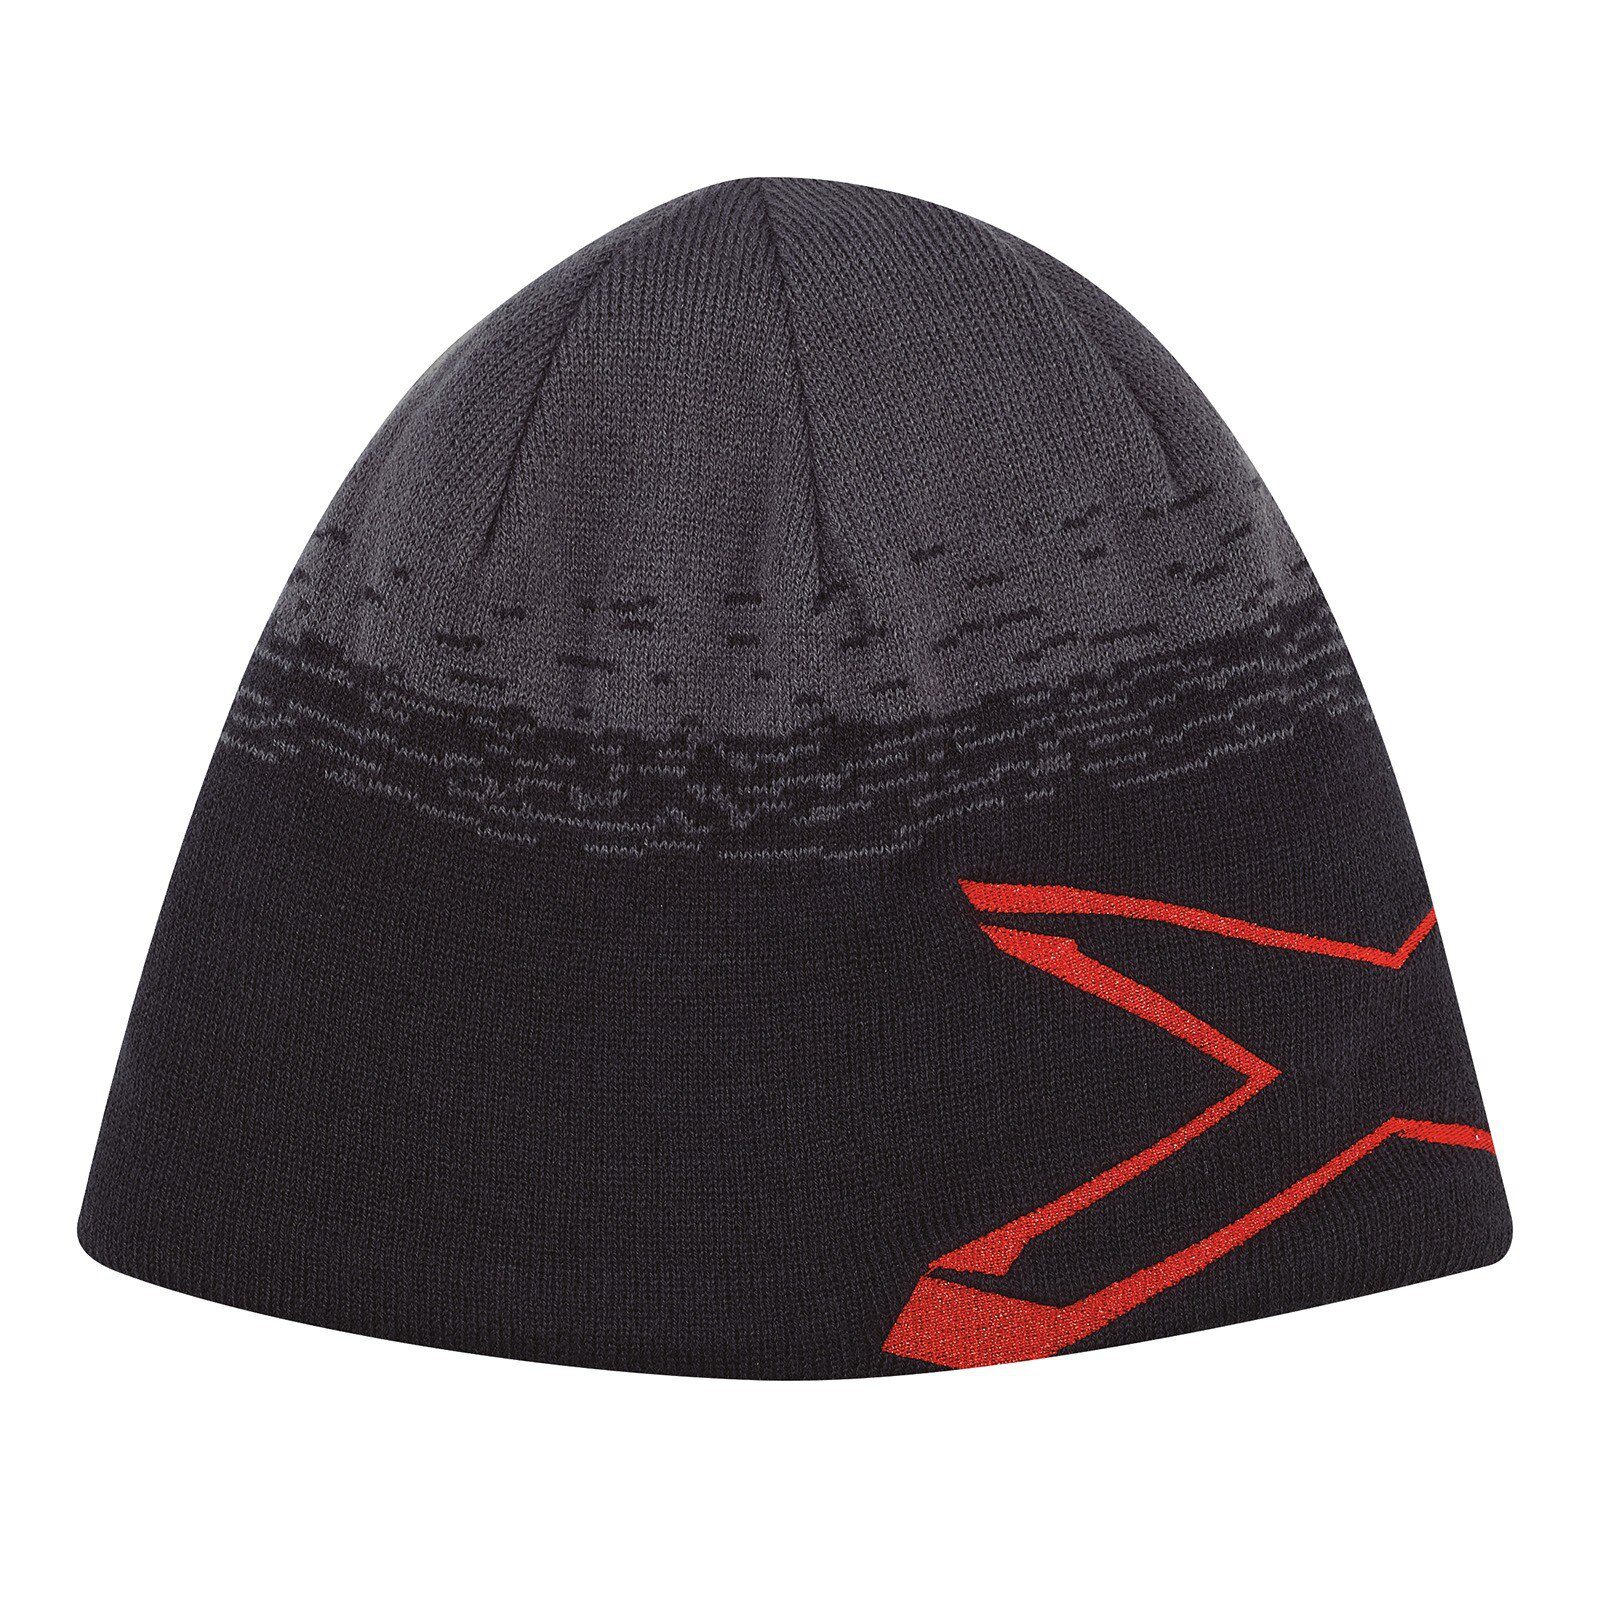 Шапка мужская Ski-Doo X hat